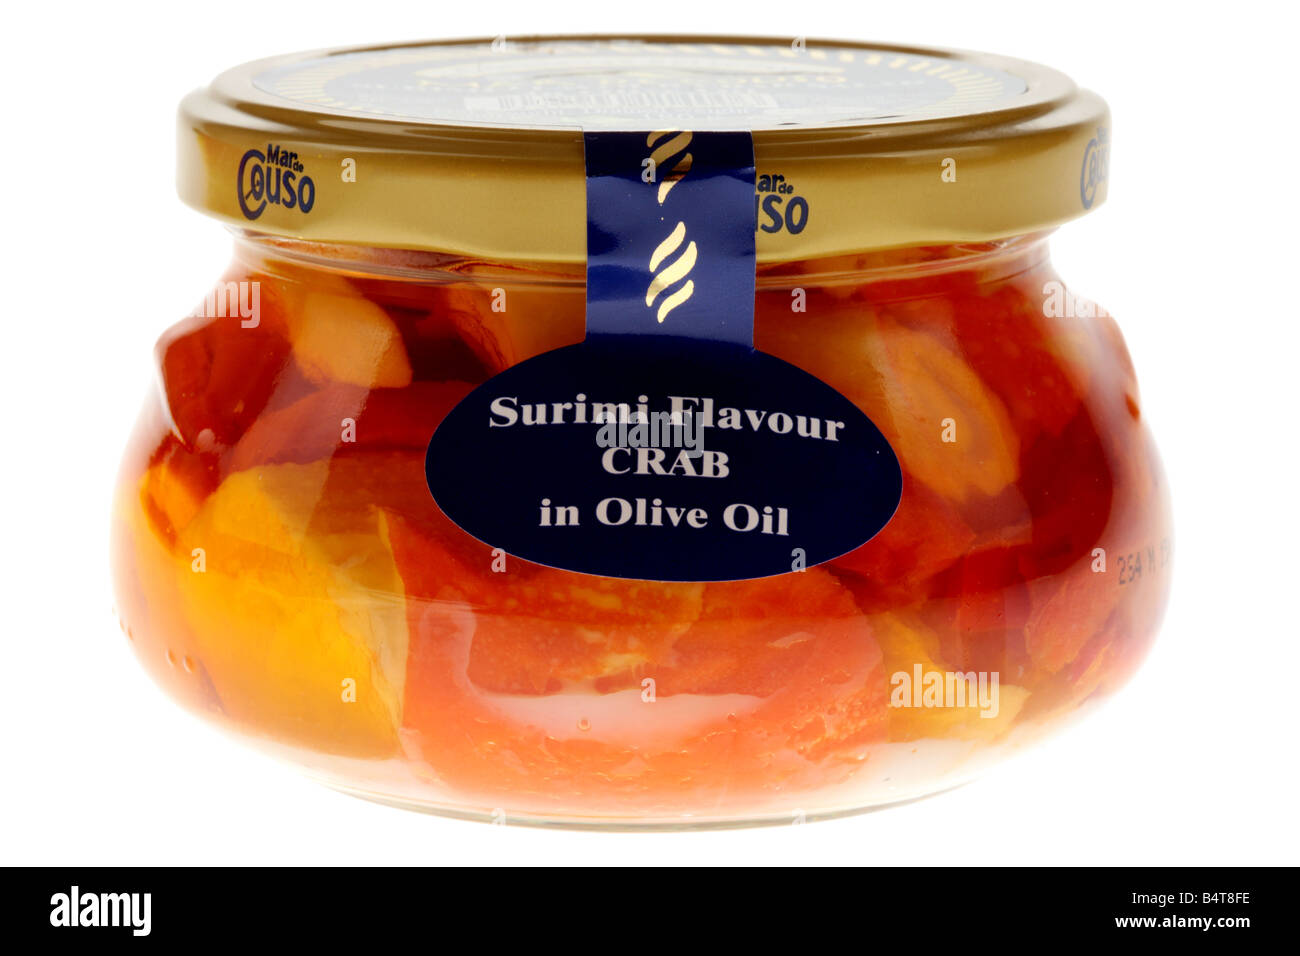 Jar Of Crab in olive oil Stock Photo